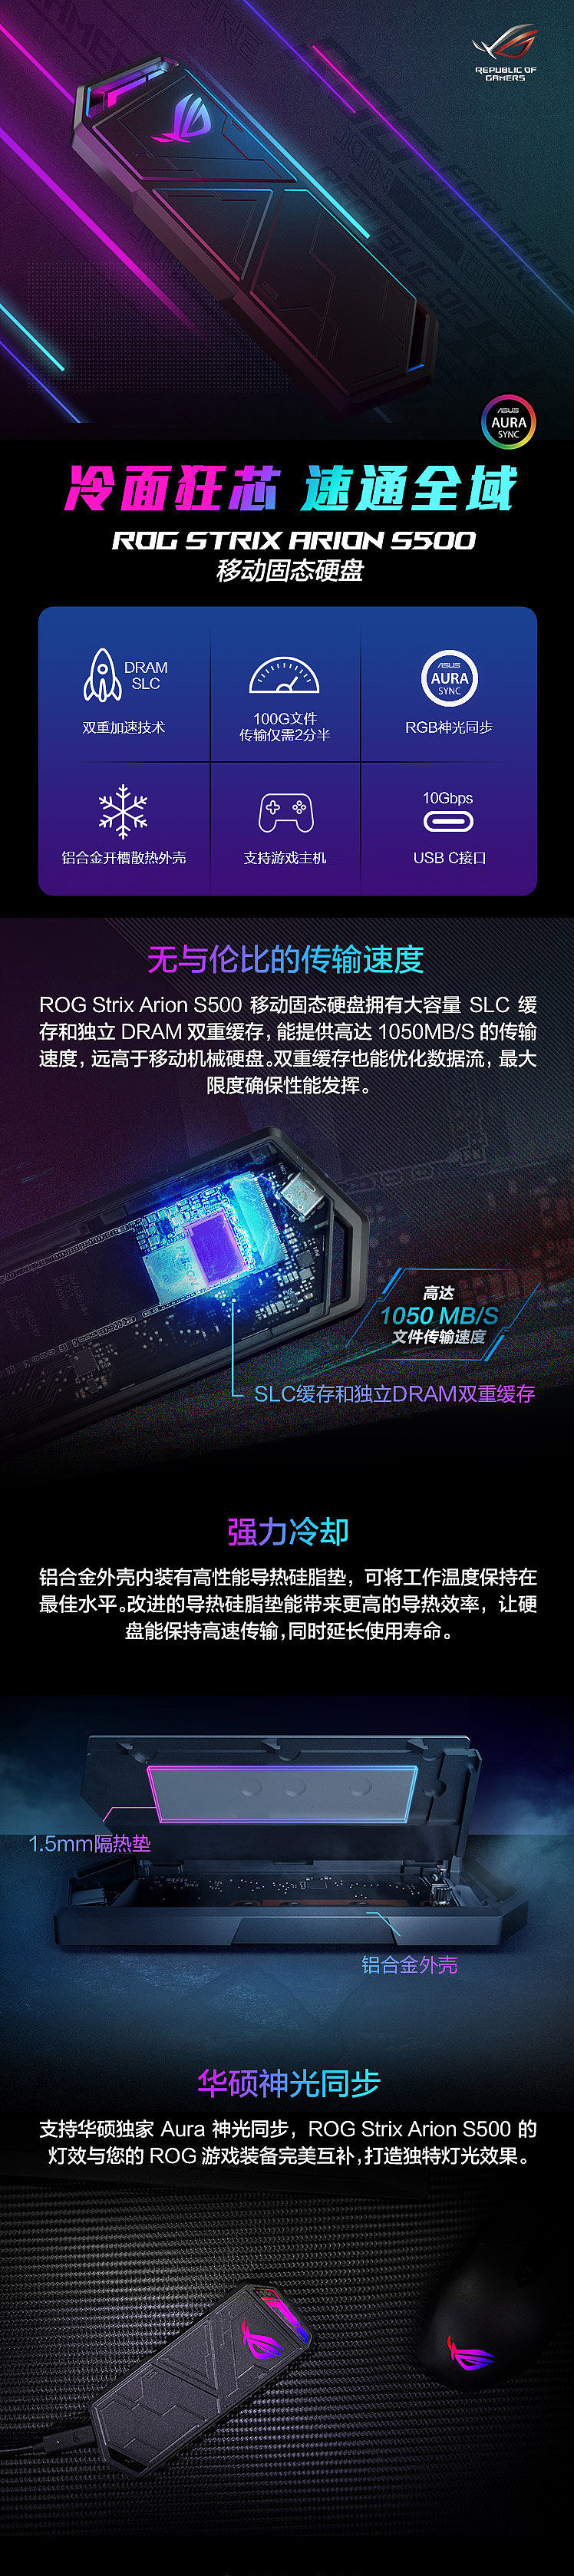 ROG STRIX ARION S500 移动固态硬盘发布：1GB/s 速率，999 元 - 1